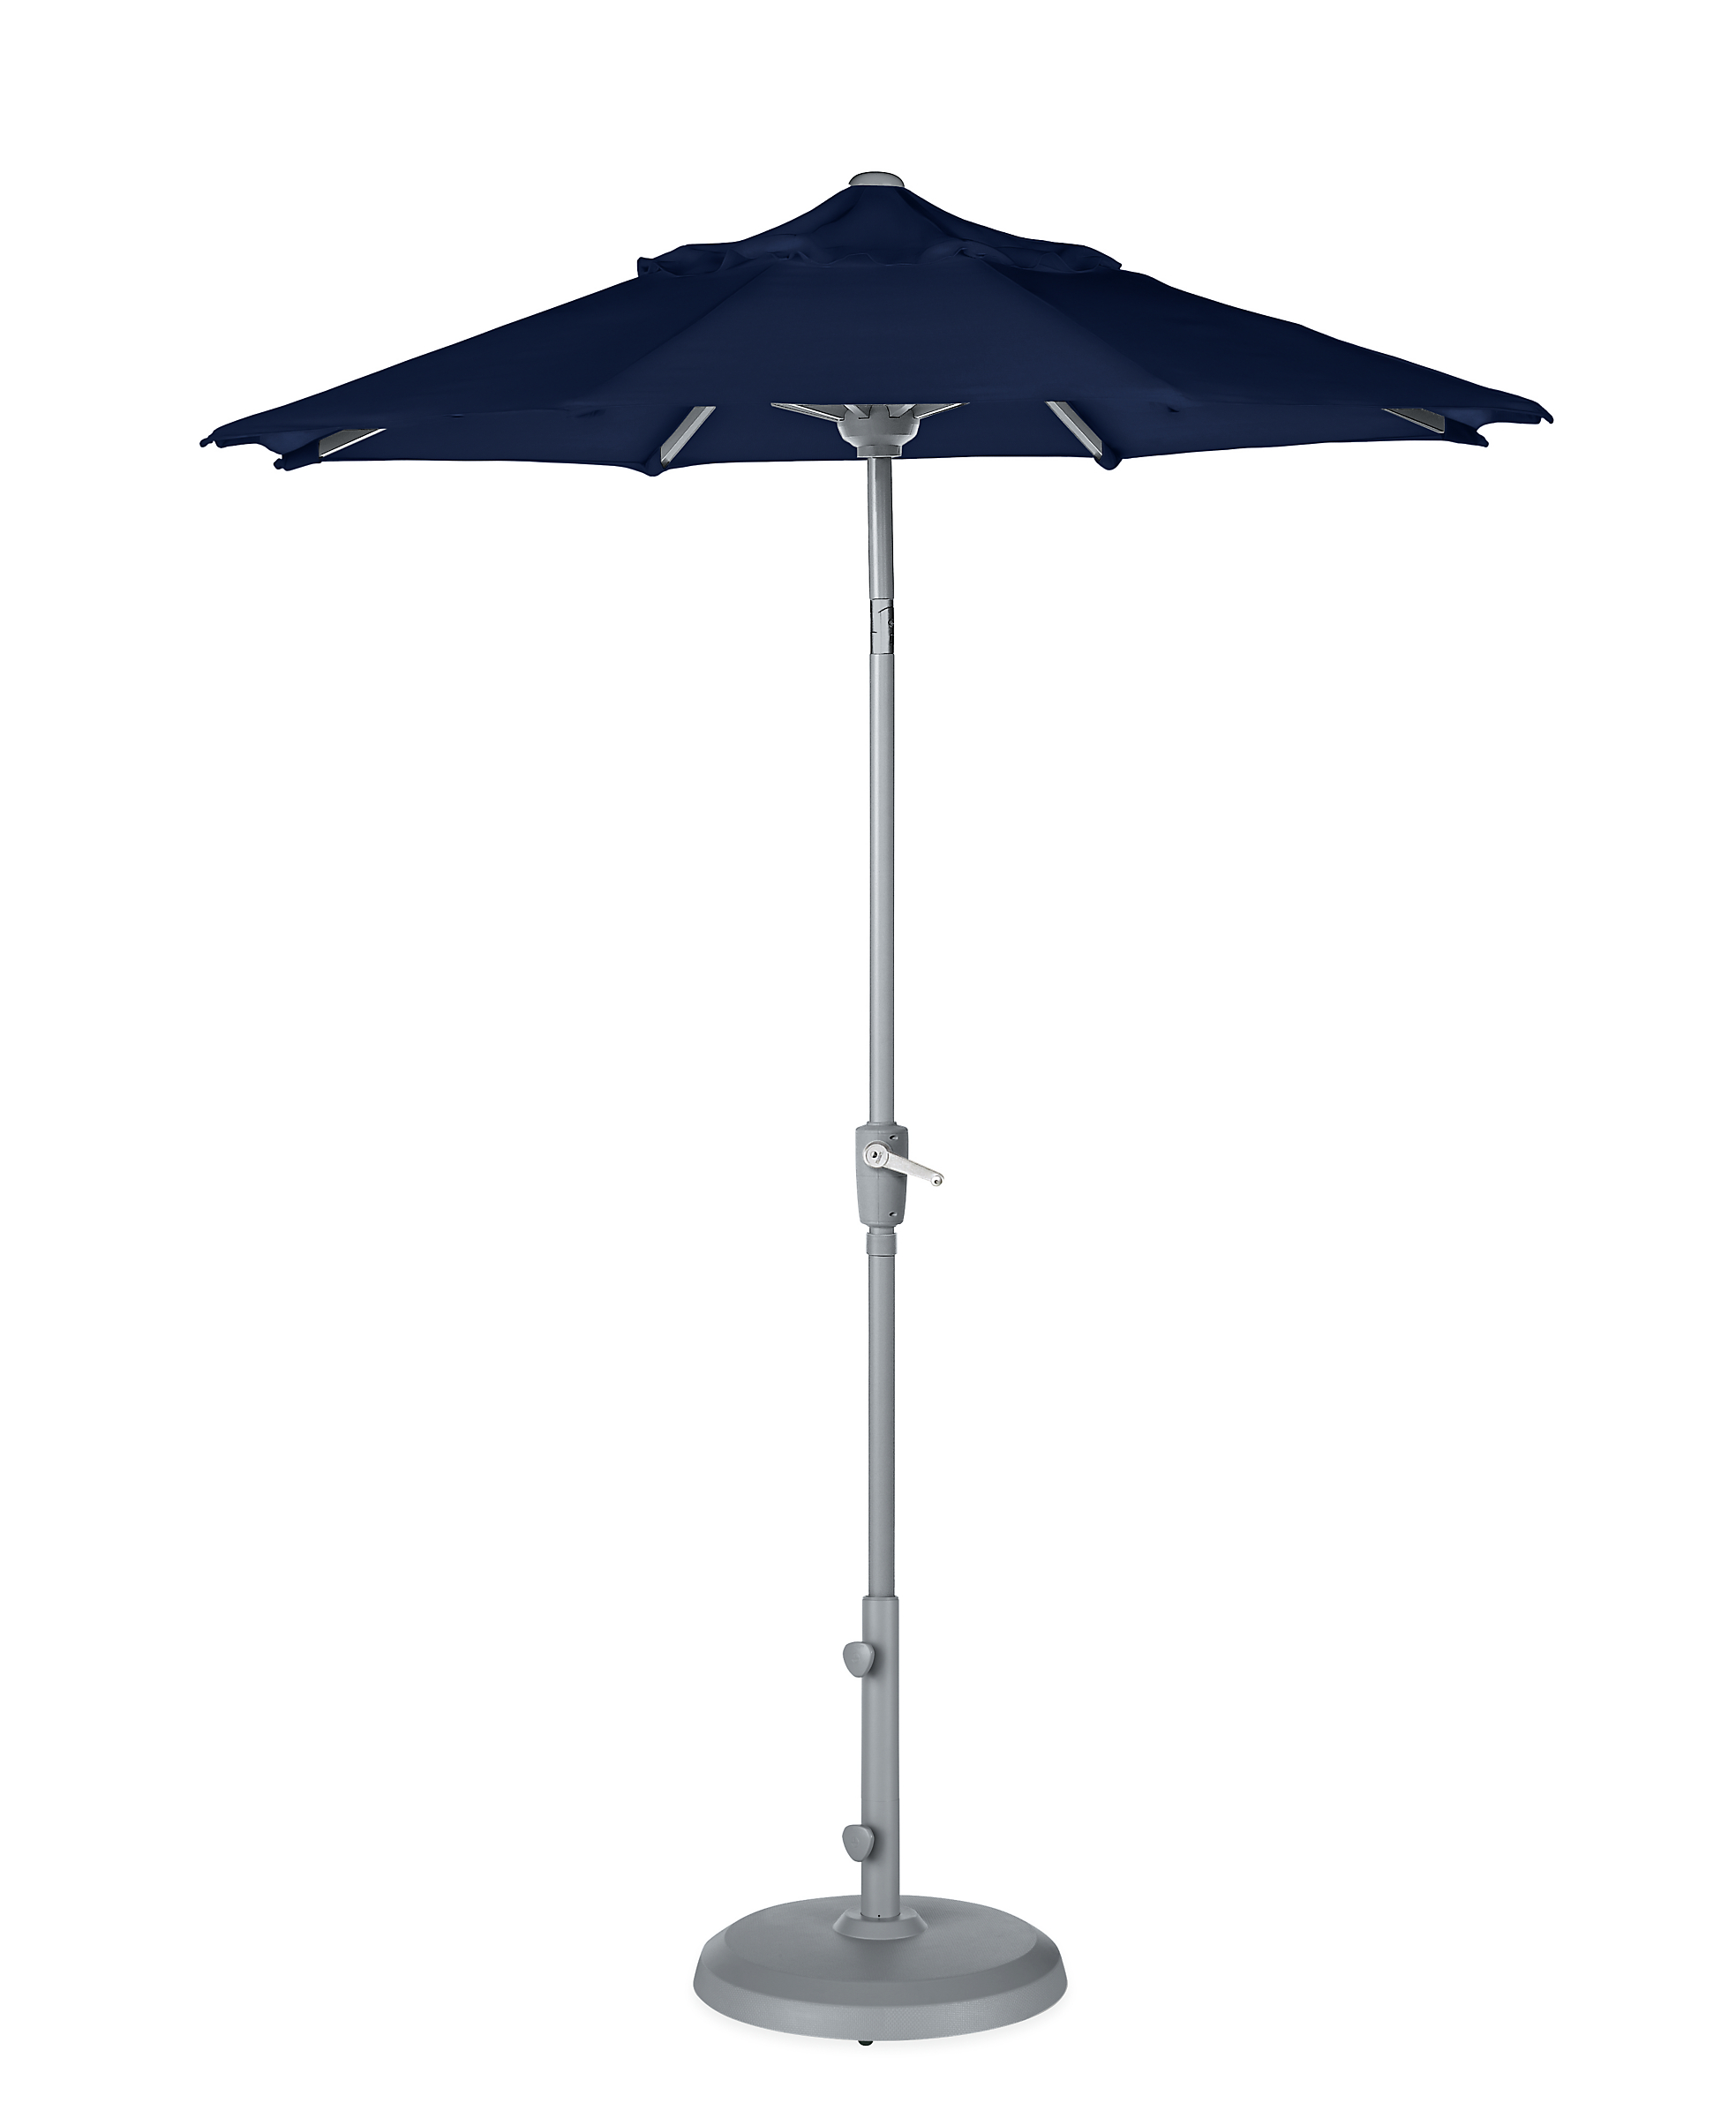 Maui 7.5' Round Patio Umbrella in Sunbrella Canvas Navy with Silver Base